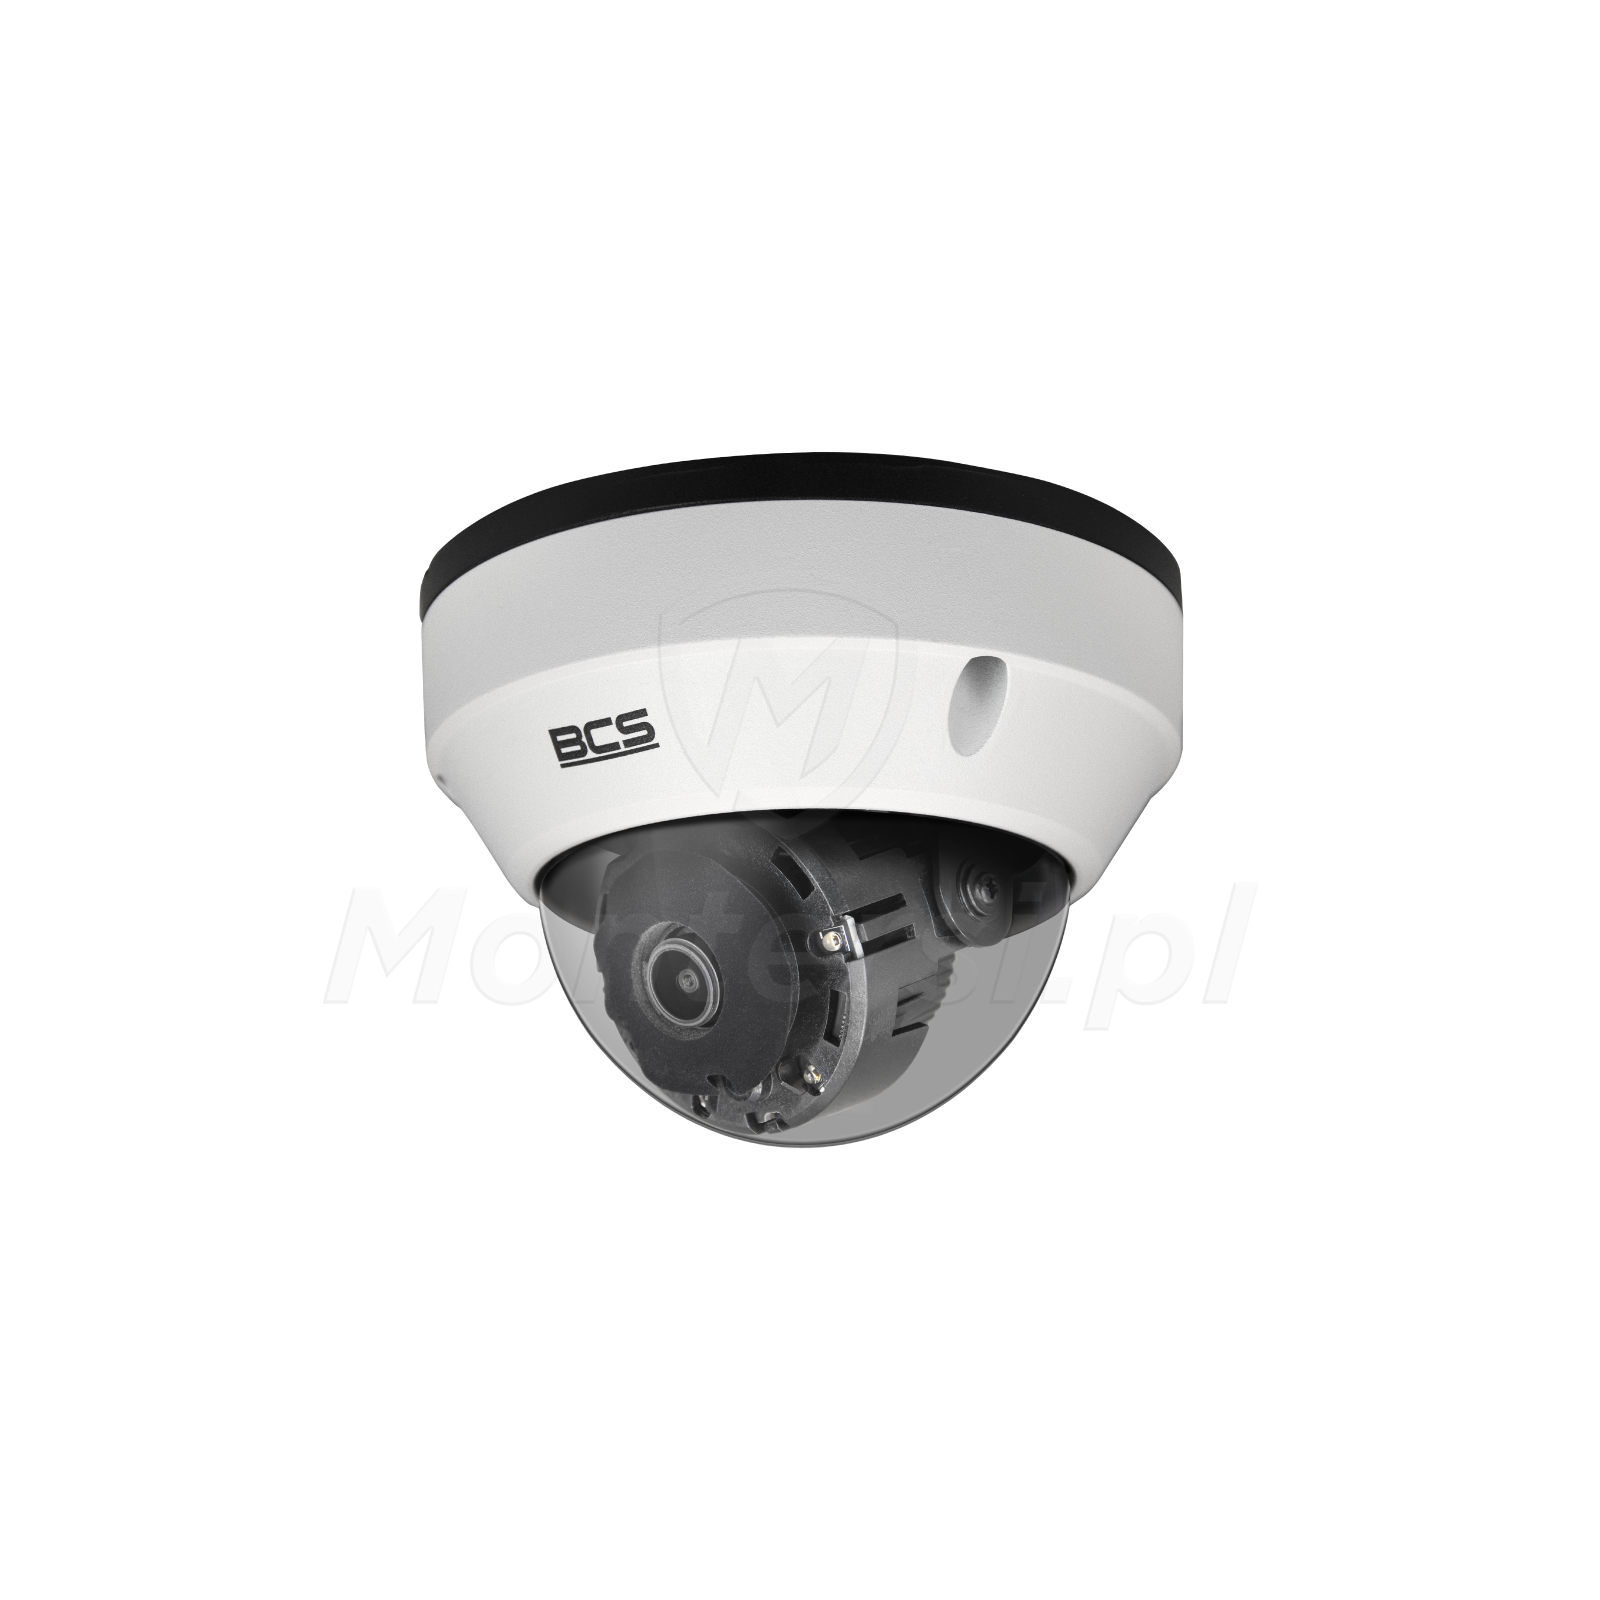 Wandaloodporna kamera IP BCS-U-DIP35VSR4